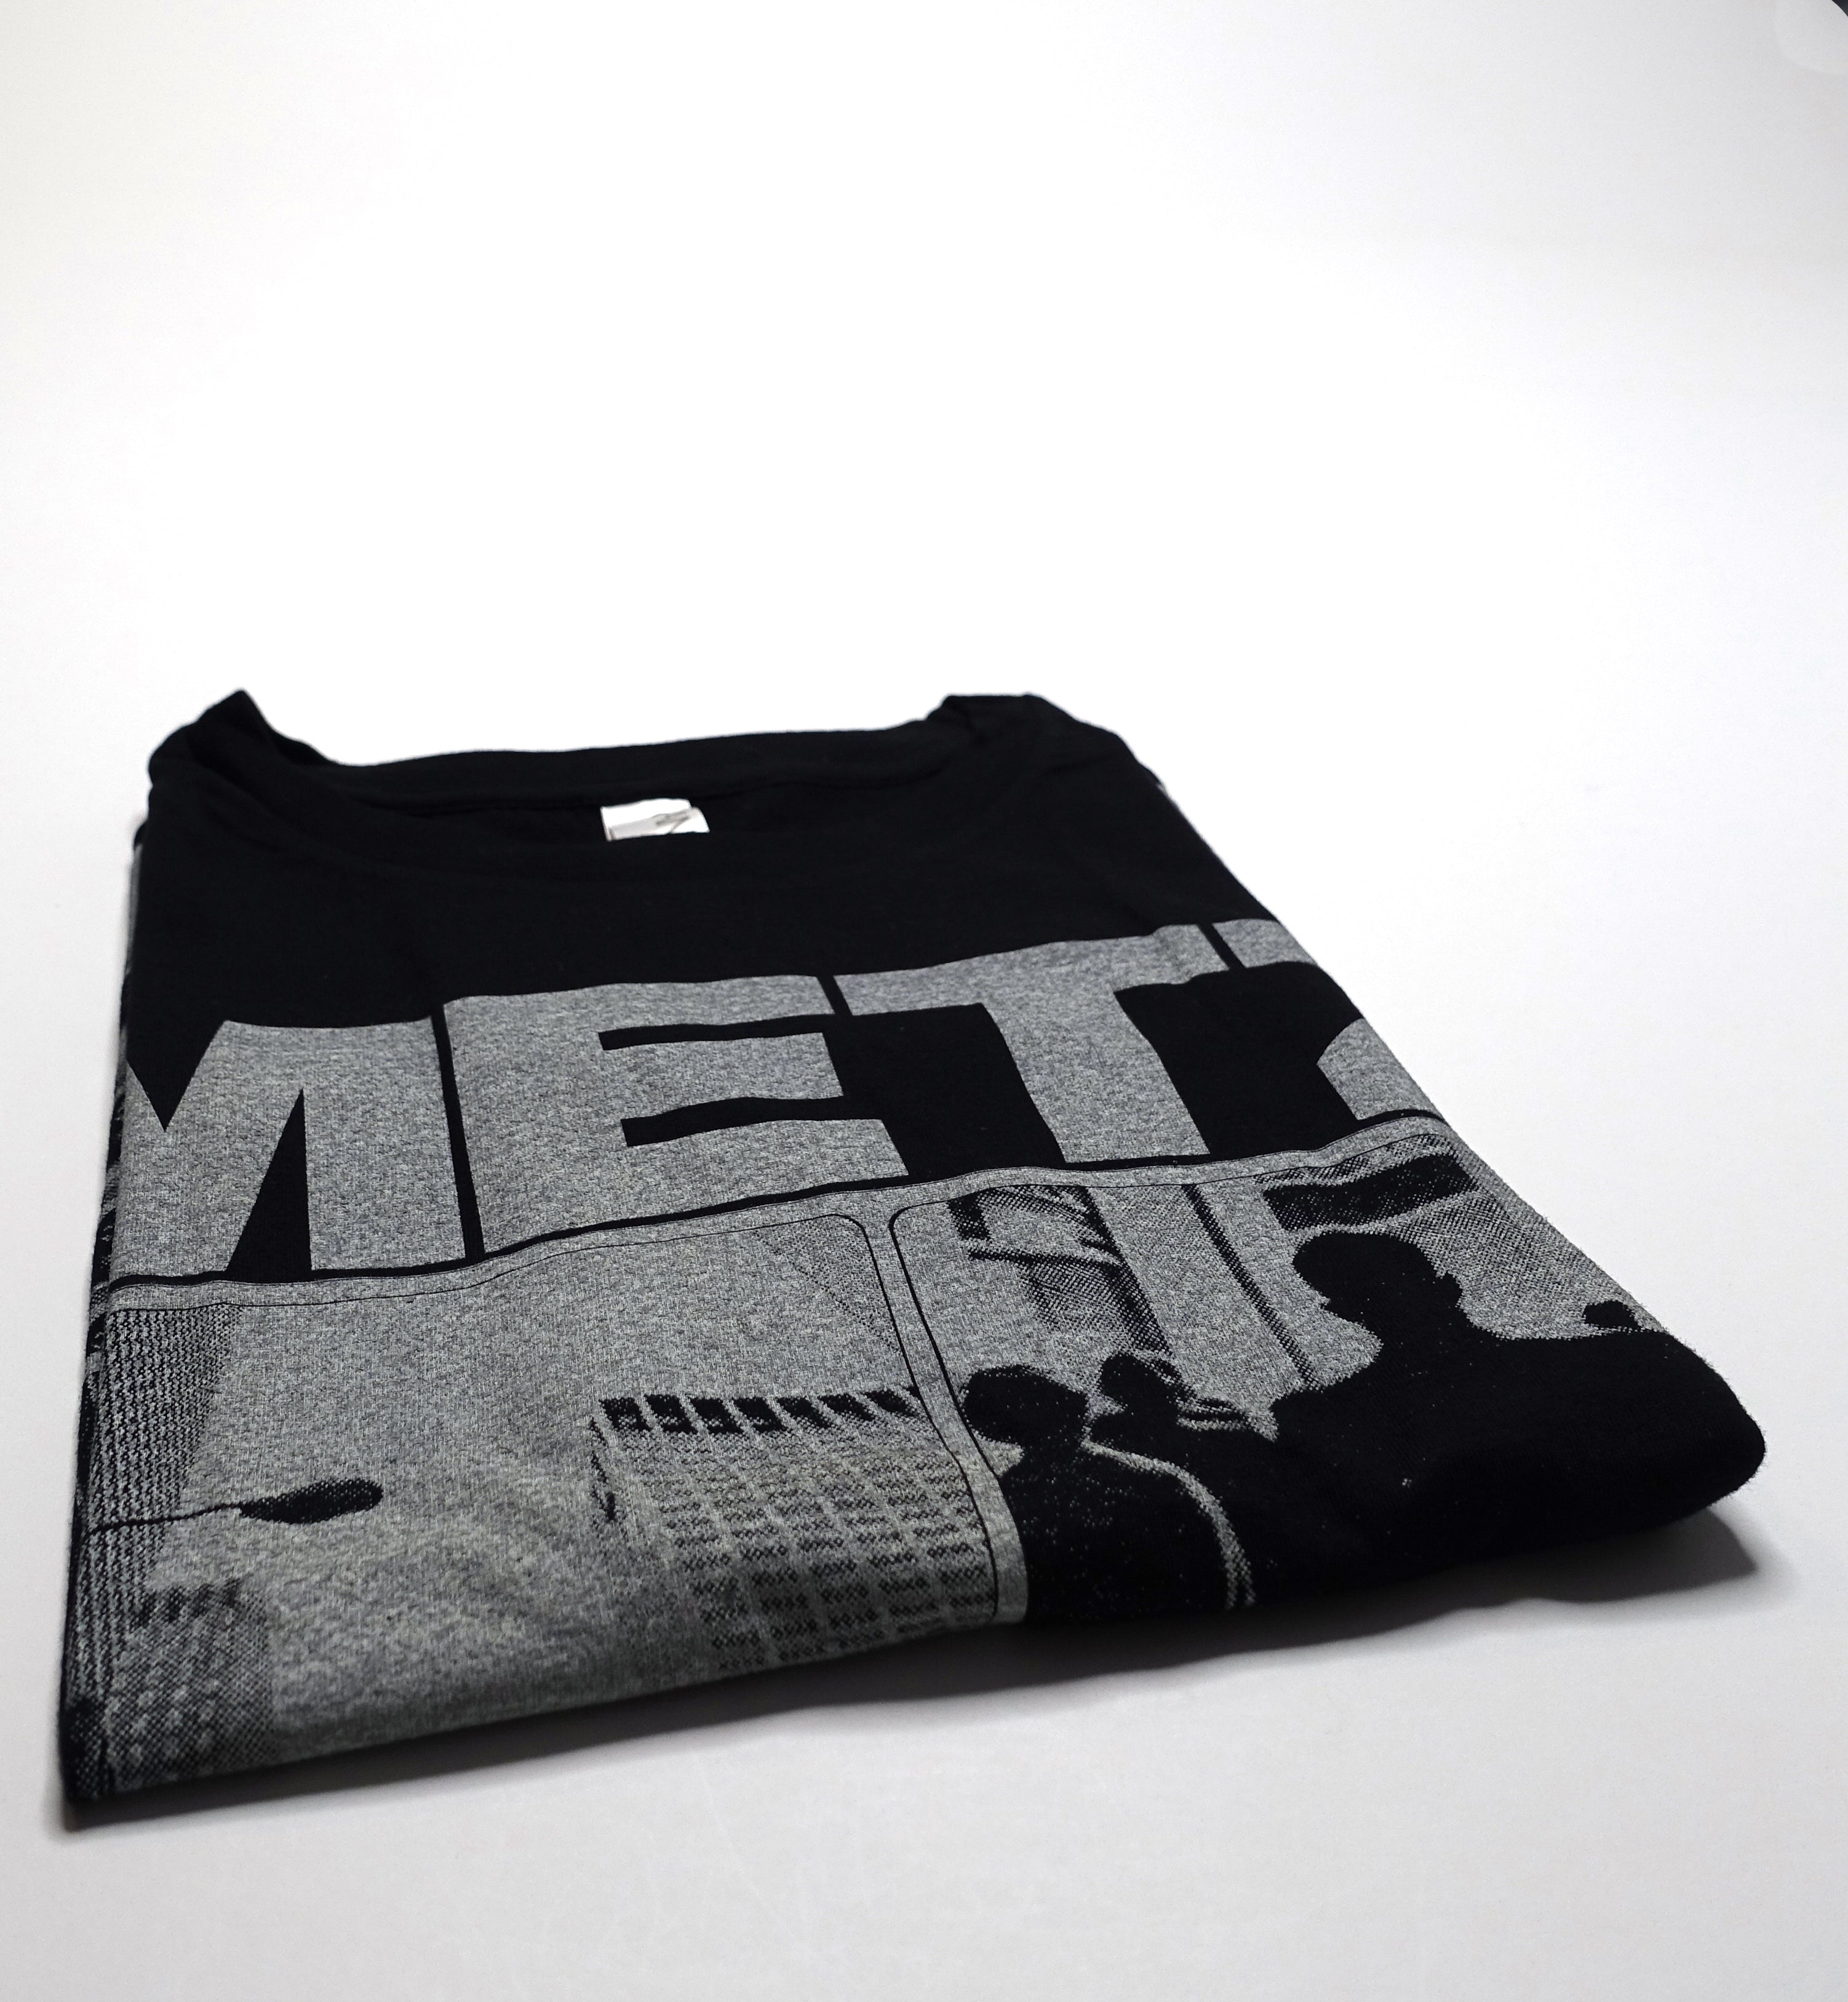 METZ - Metz II Quarter Frame 2015 Tour Shirt Size XL